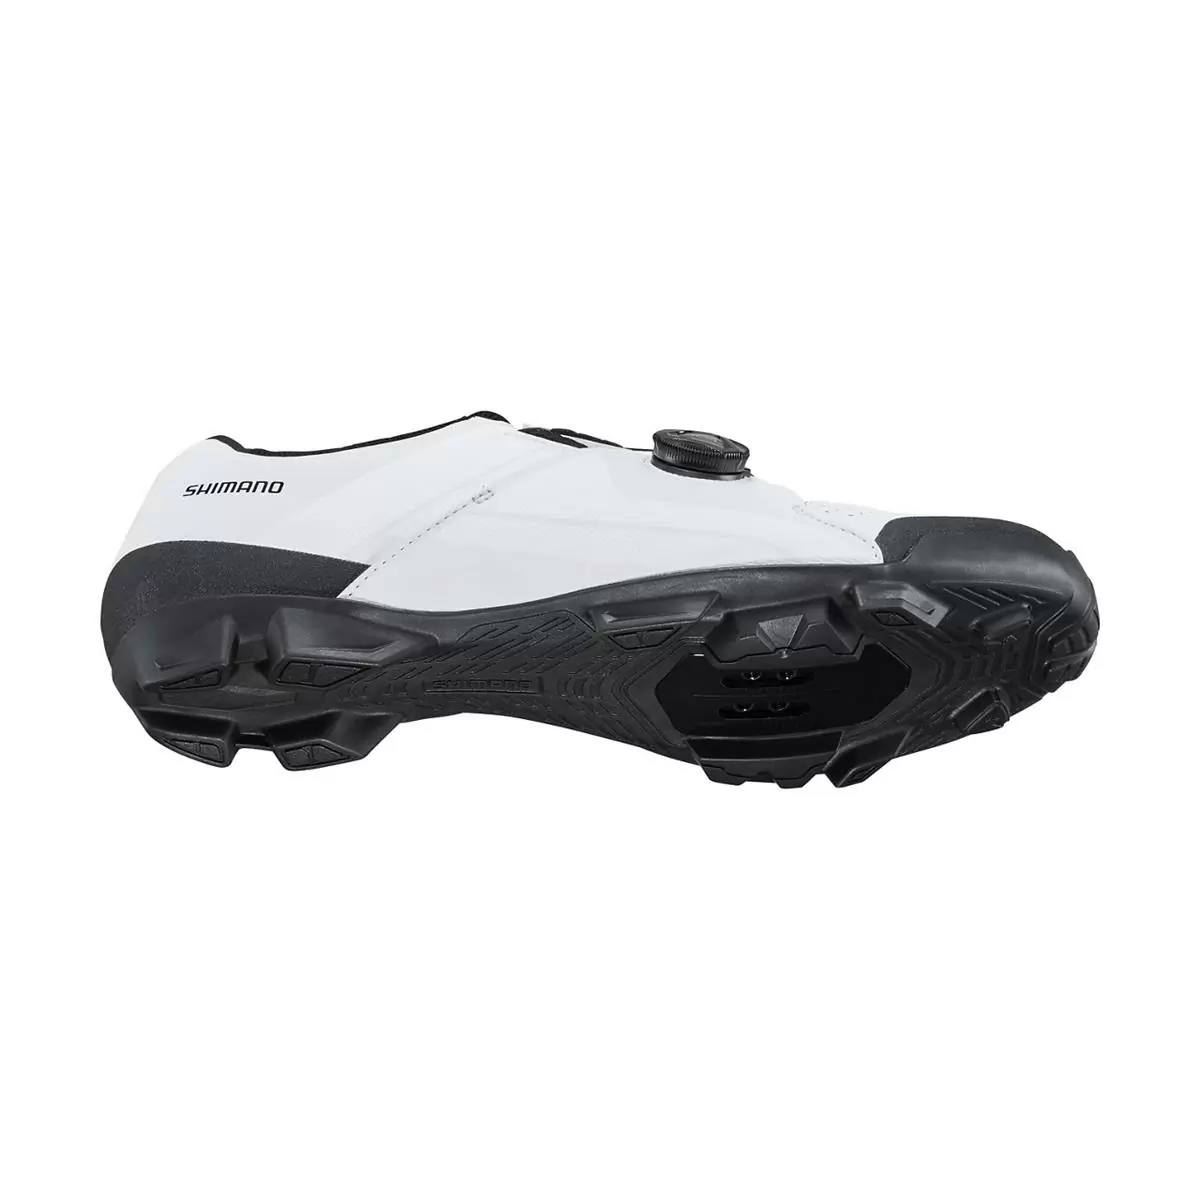 MTB Shoes XC3 SH-XC300 White Size 38 #1